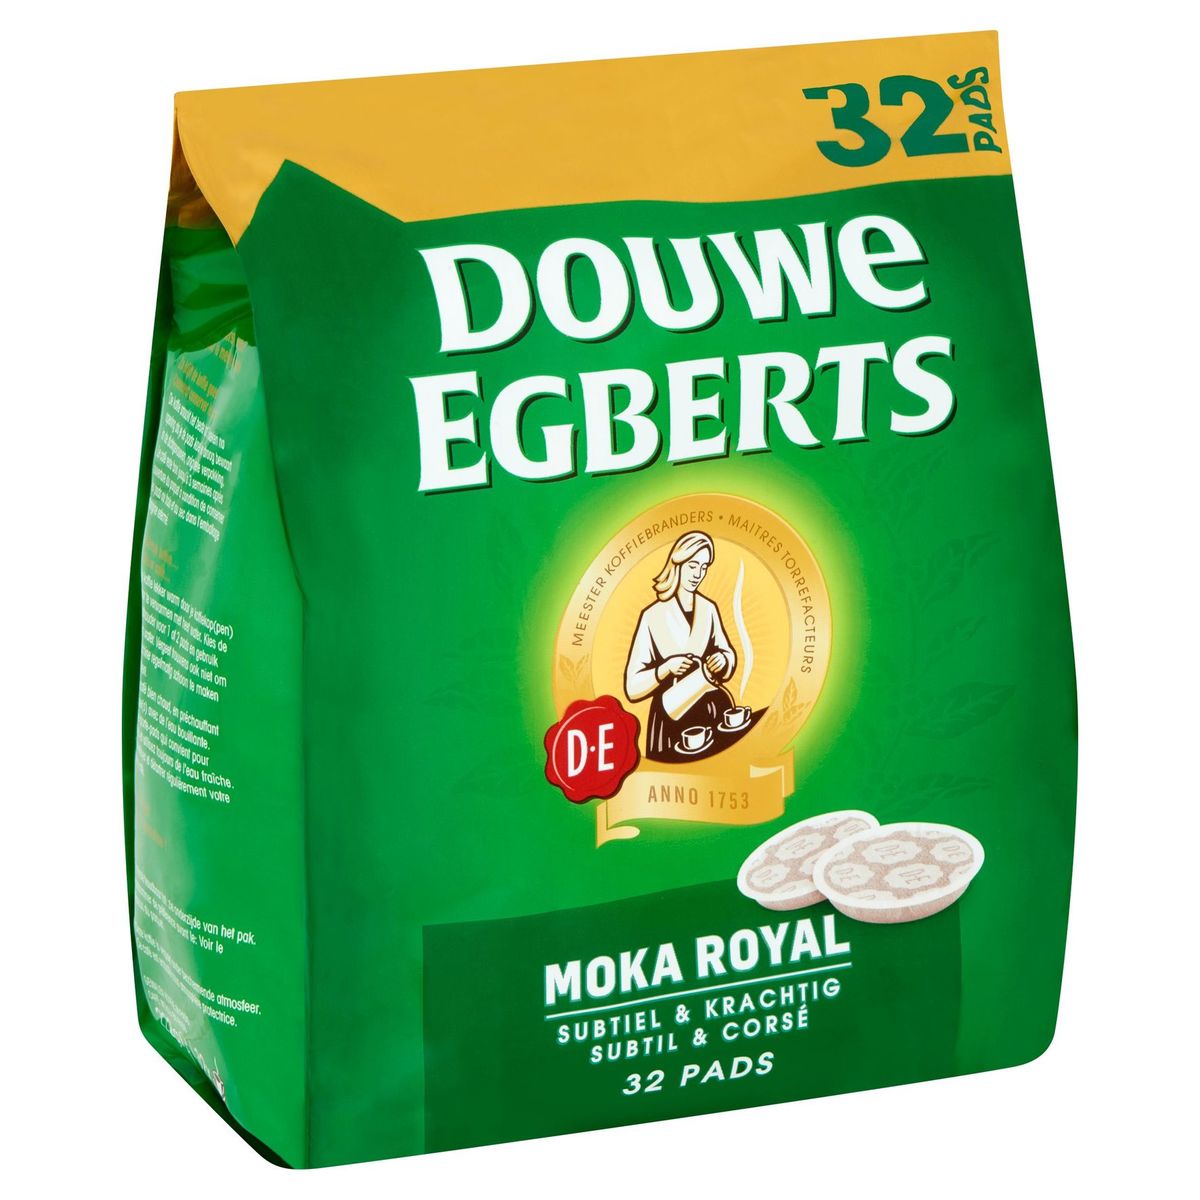 DOUWE EGBERTS Koffie Pads Moka Royal 32 Stuks